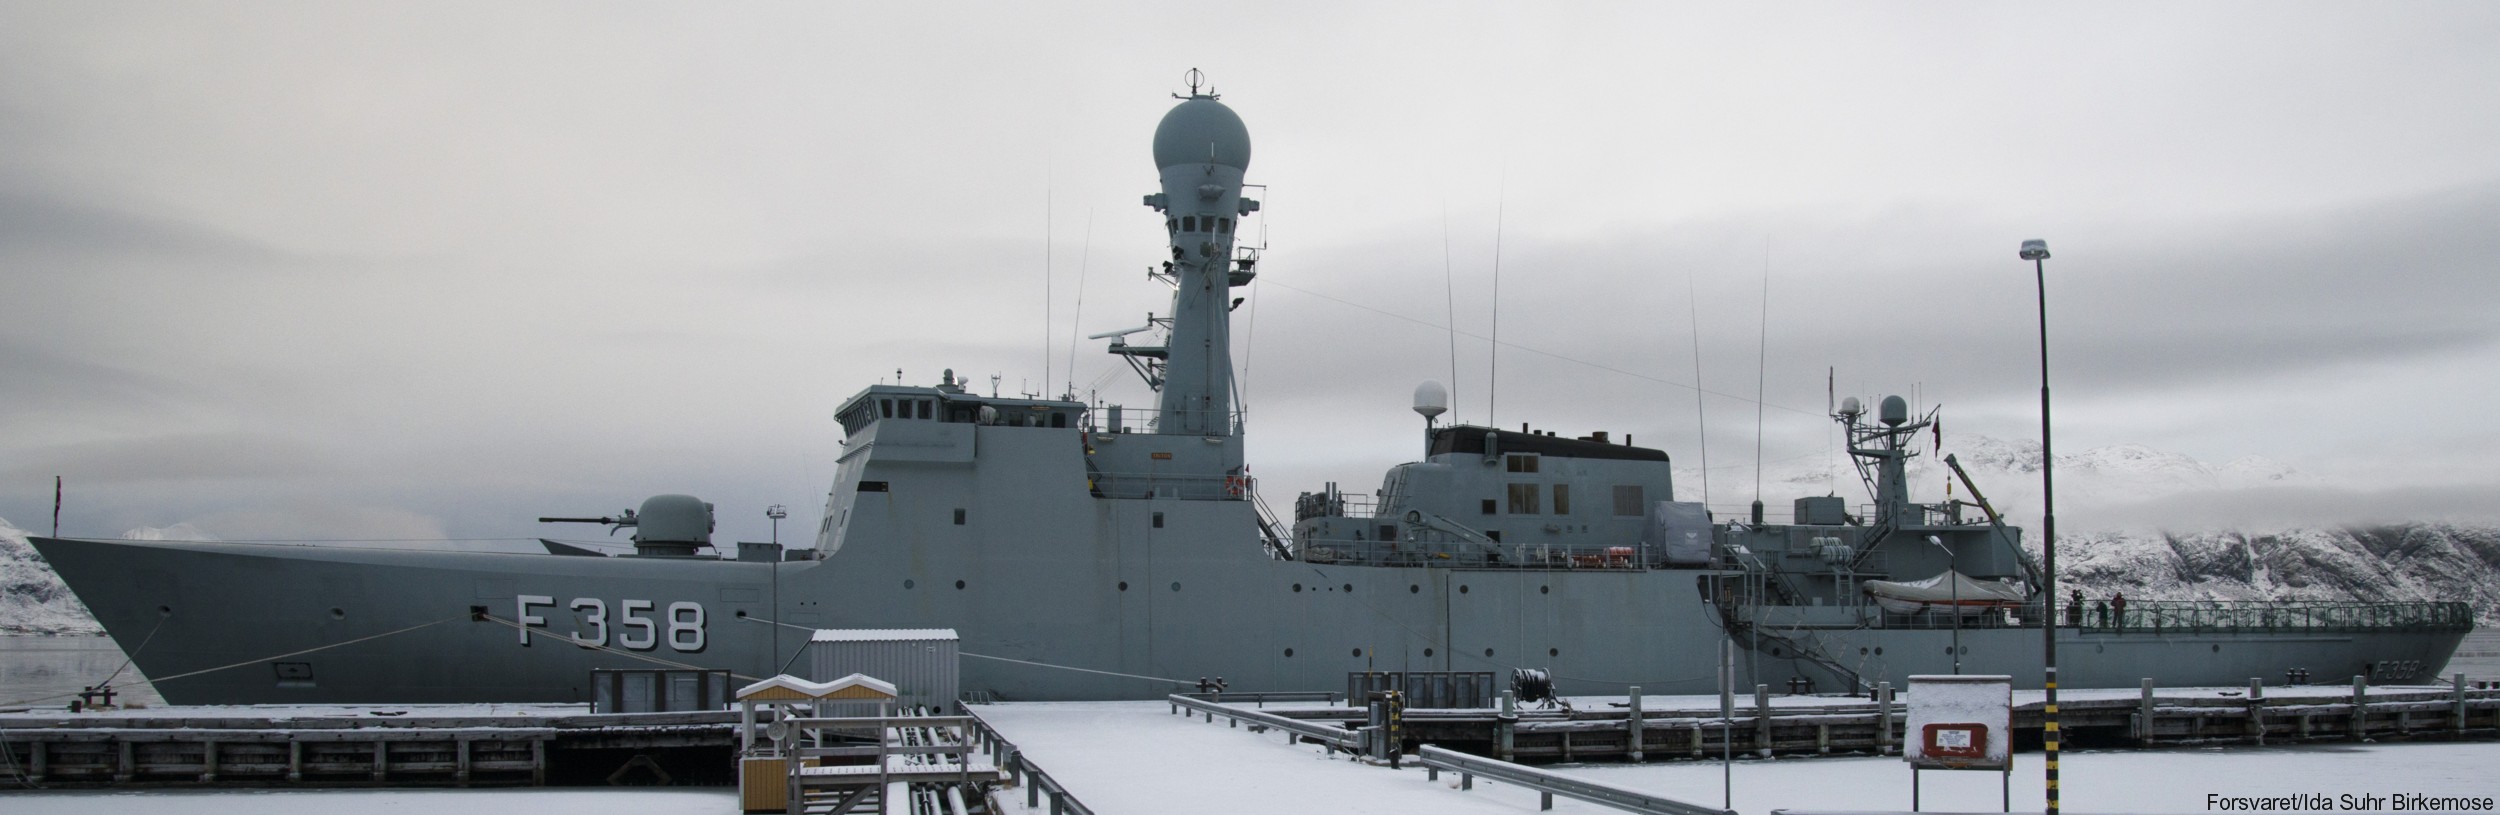 f-358 hdms triton thetis class ocean patrol frigate royal danish navy kongelige danske marine kdm inspektionsskibet 10